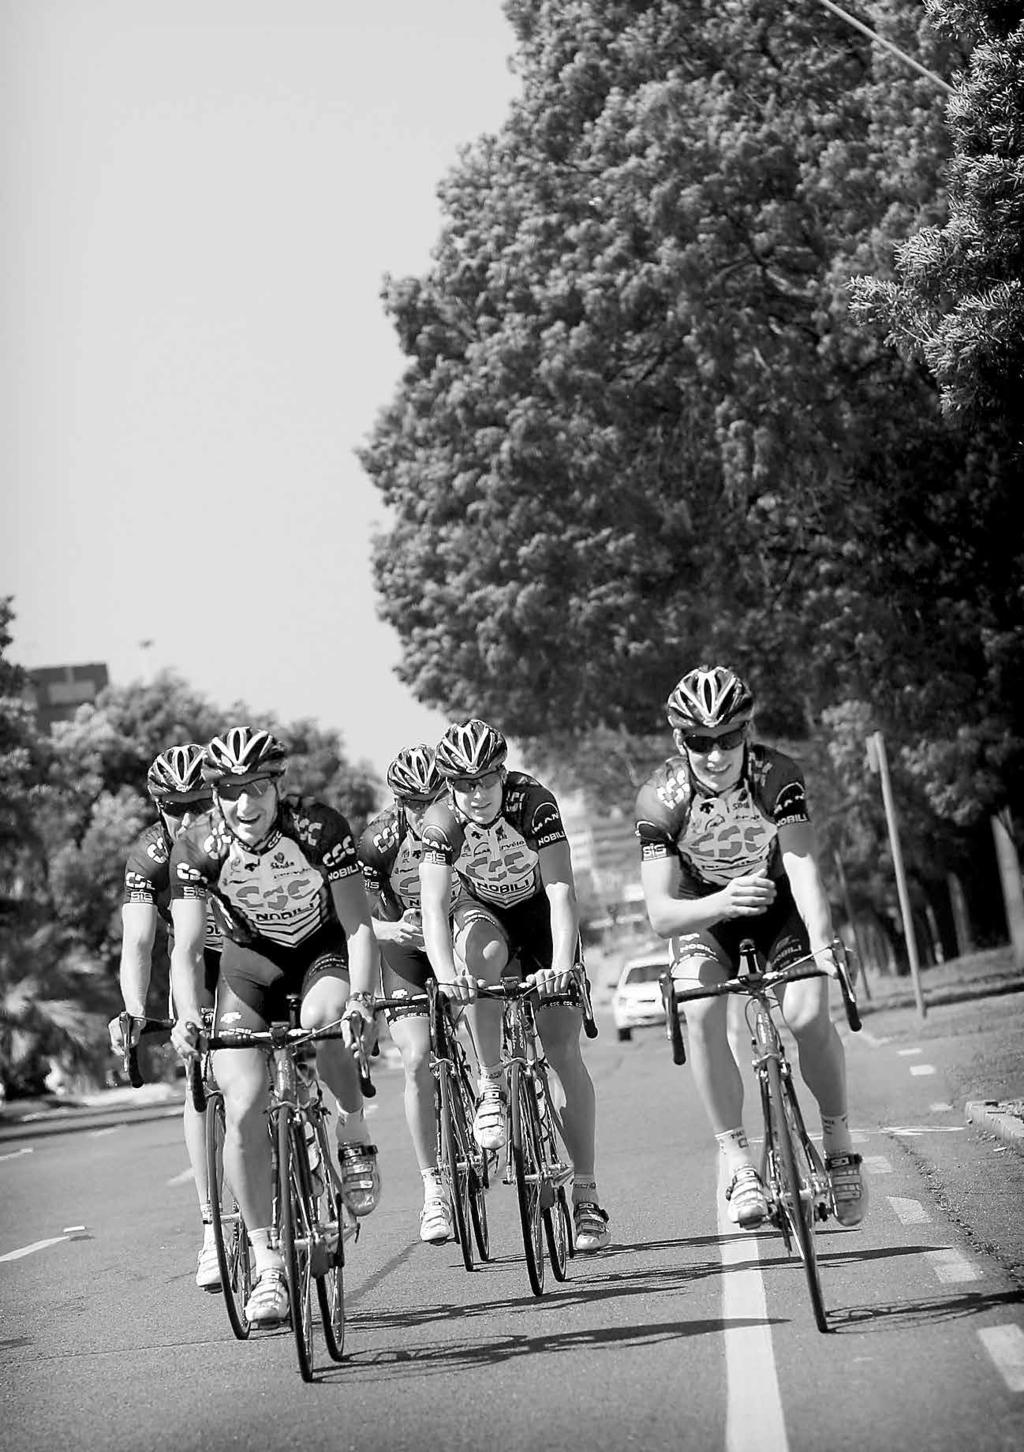 A cycling team checks